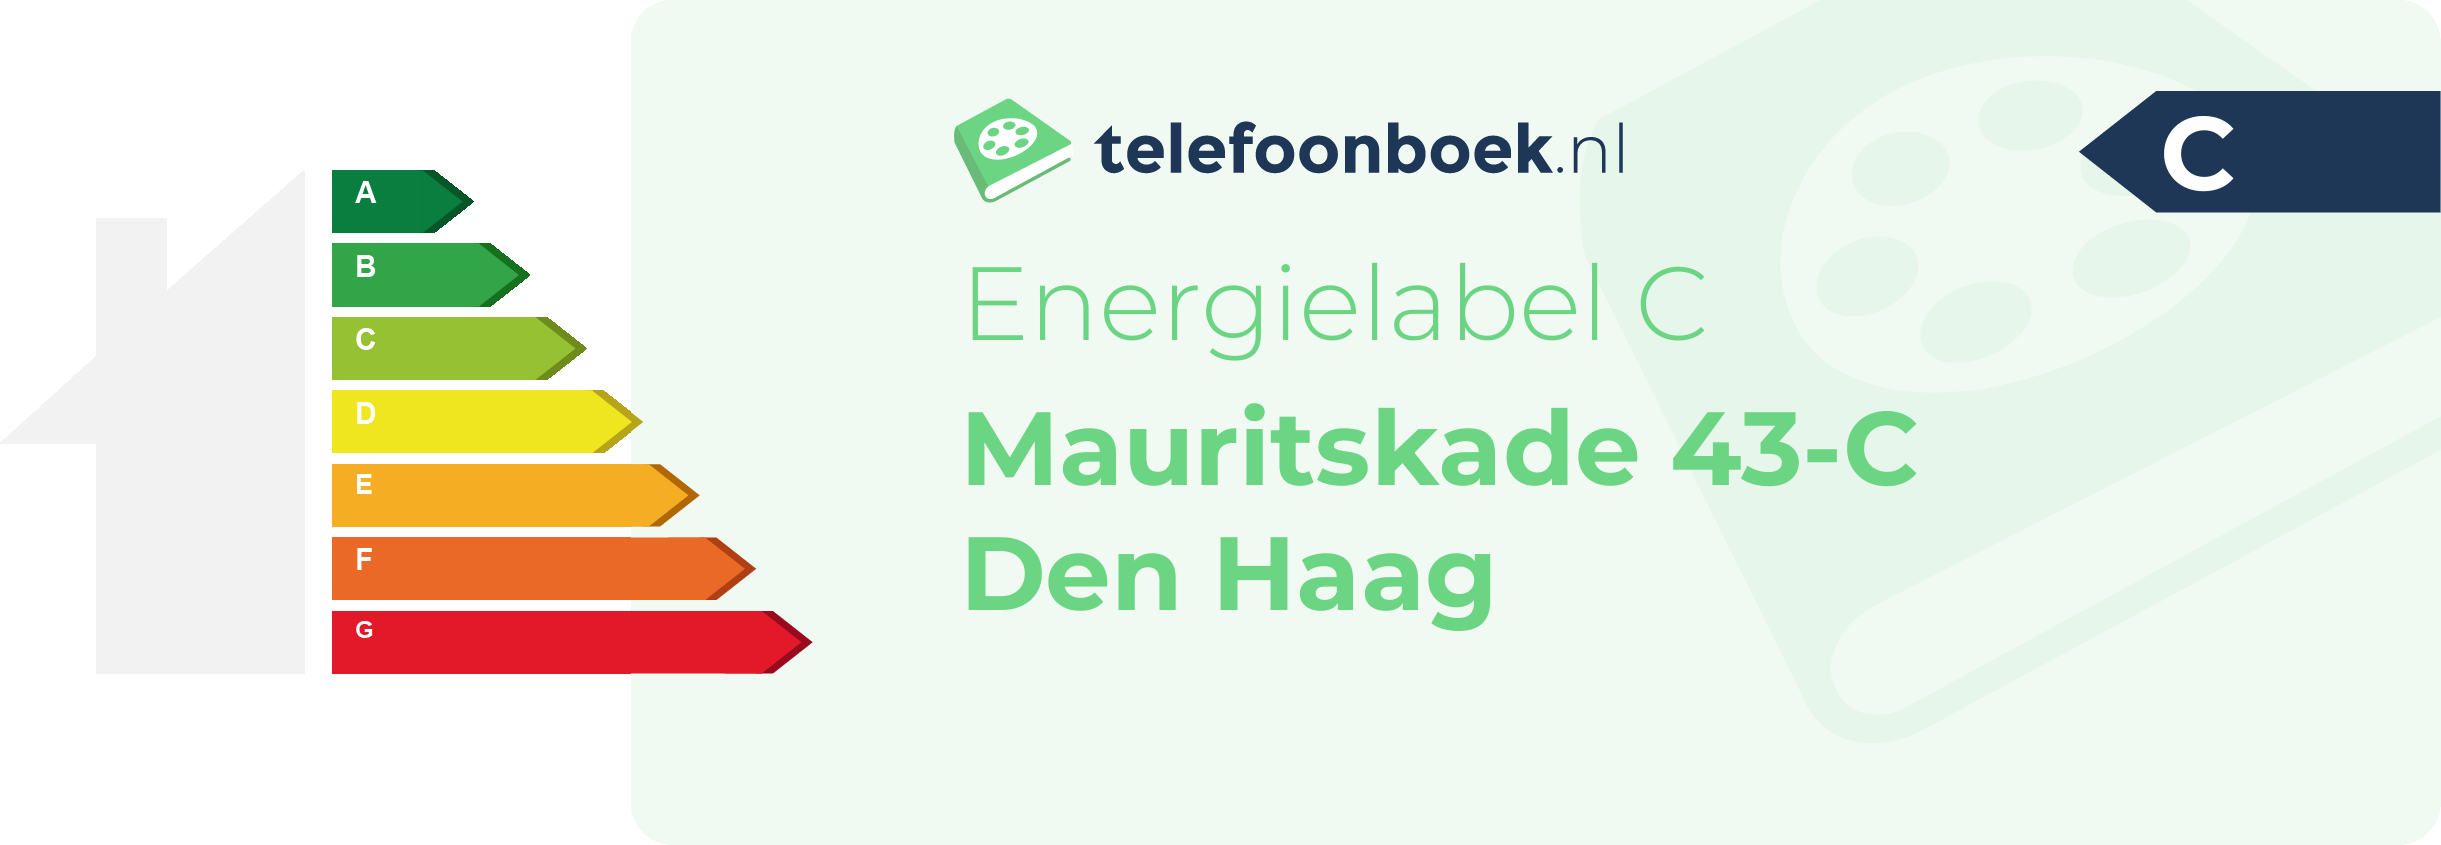 Energielabel Mauritskade 43-C Den Haag